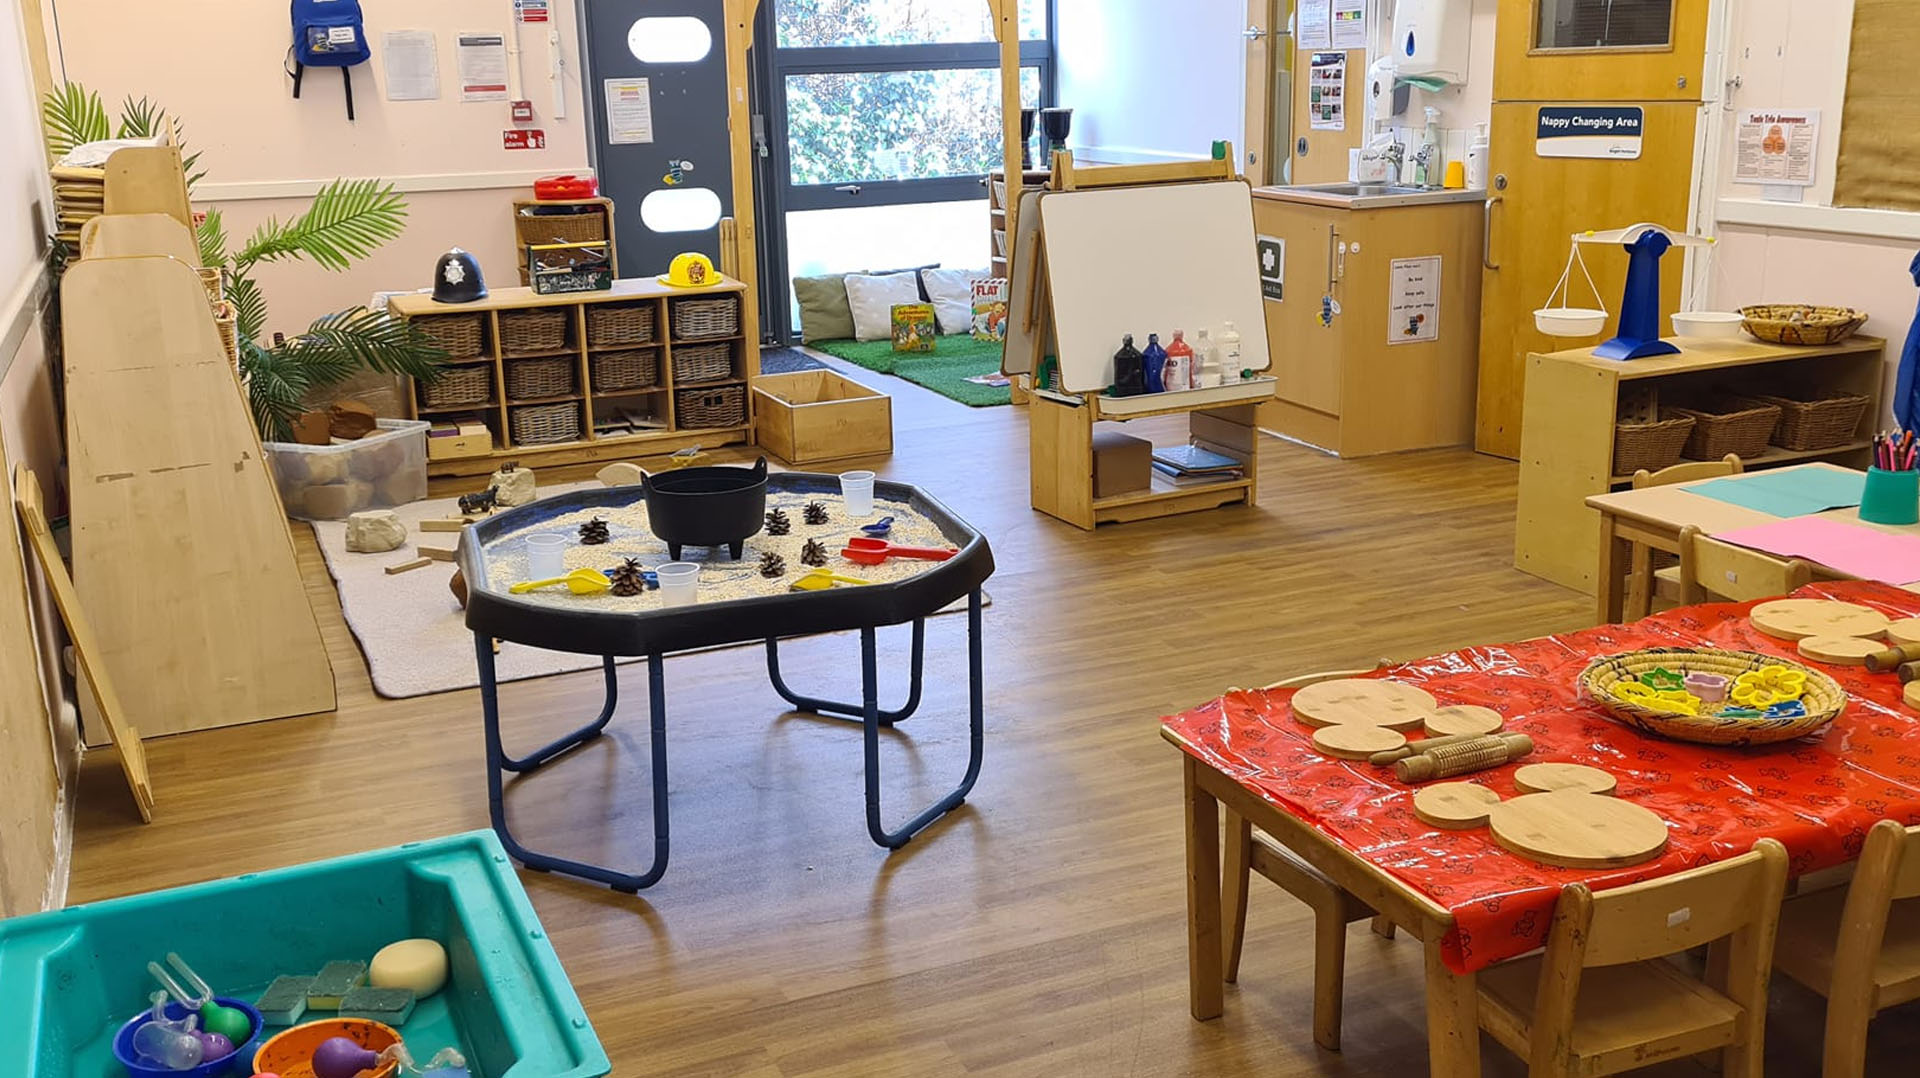 Kew Day Nursery and Preschool nursery room